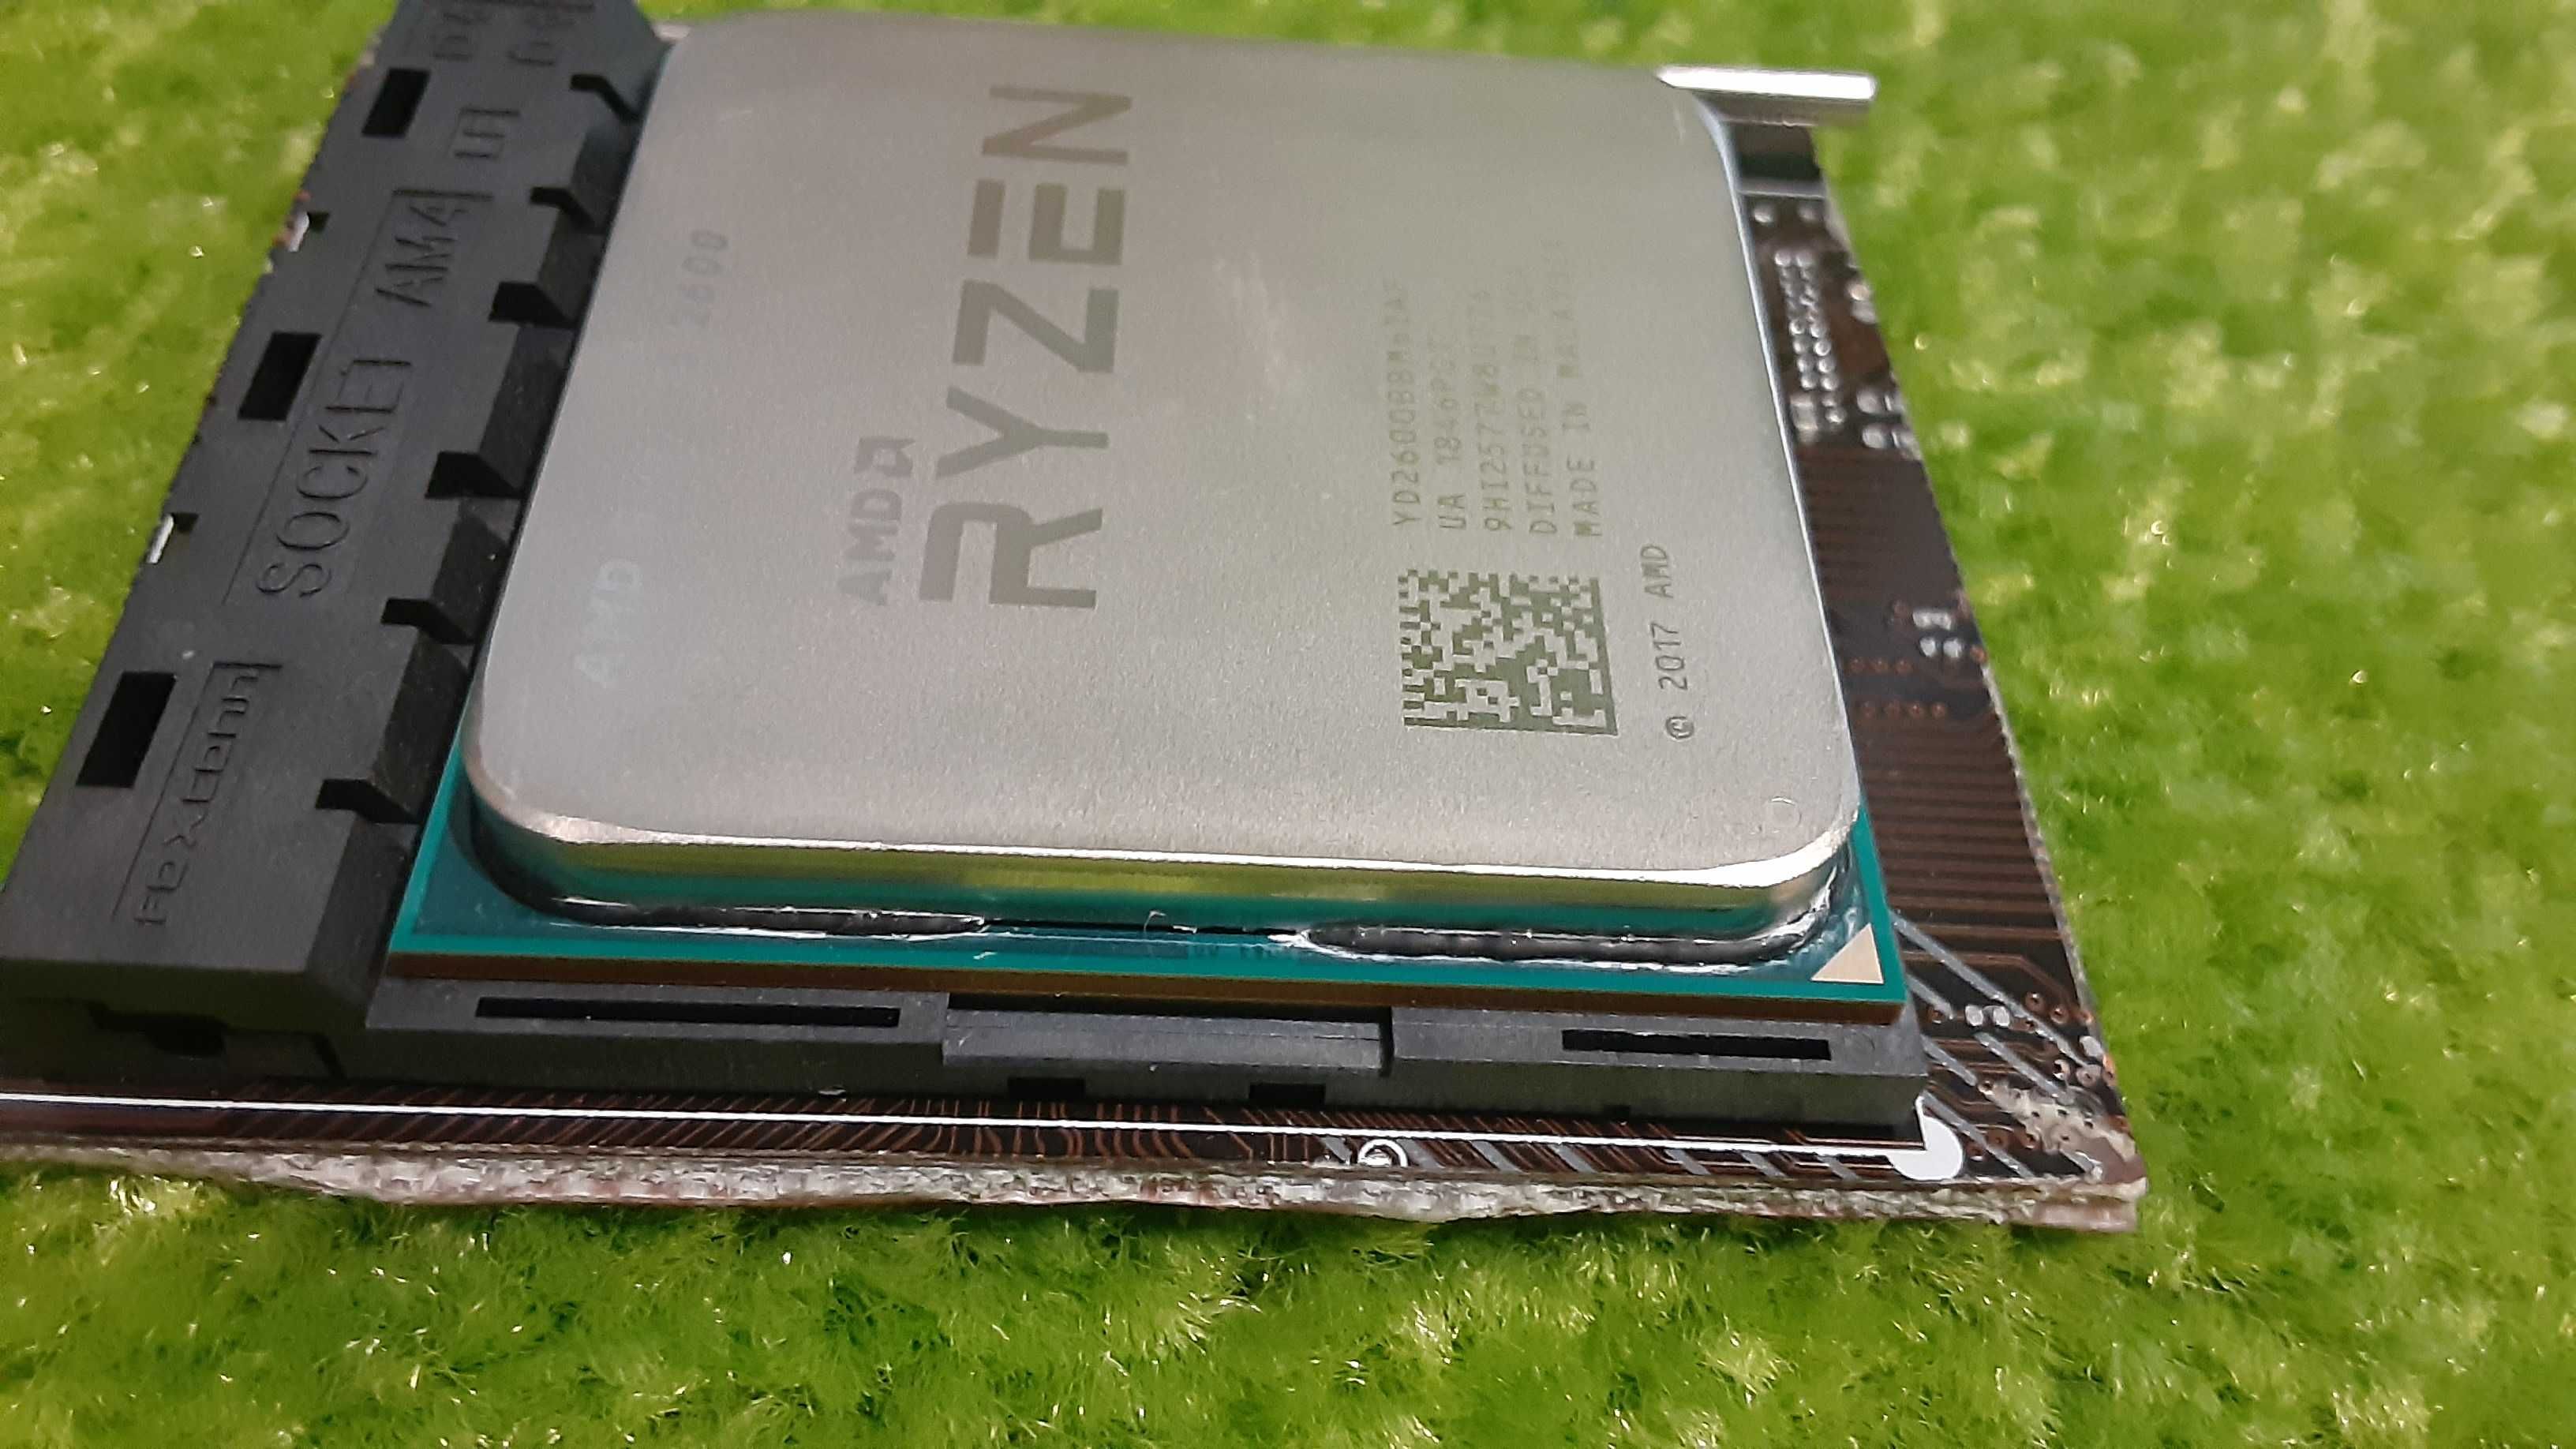 procesor AMD Ryzen 5 2600